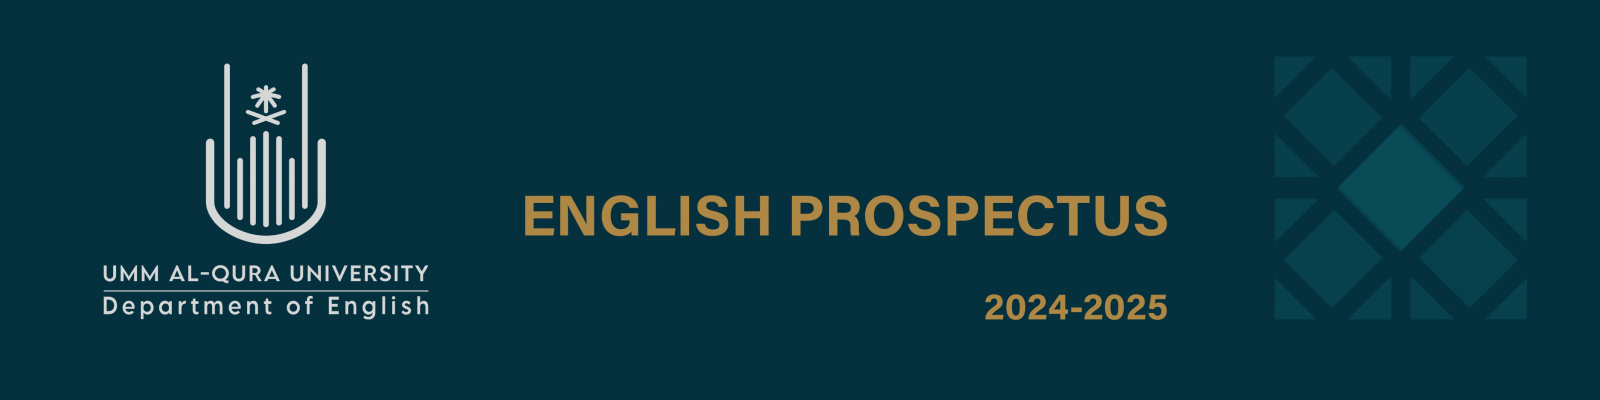 English Prospectus 2024-2025